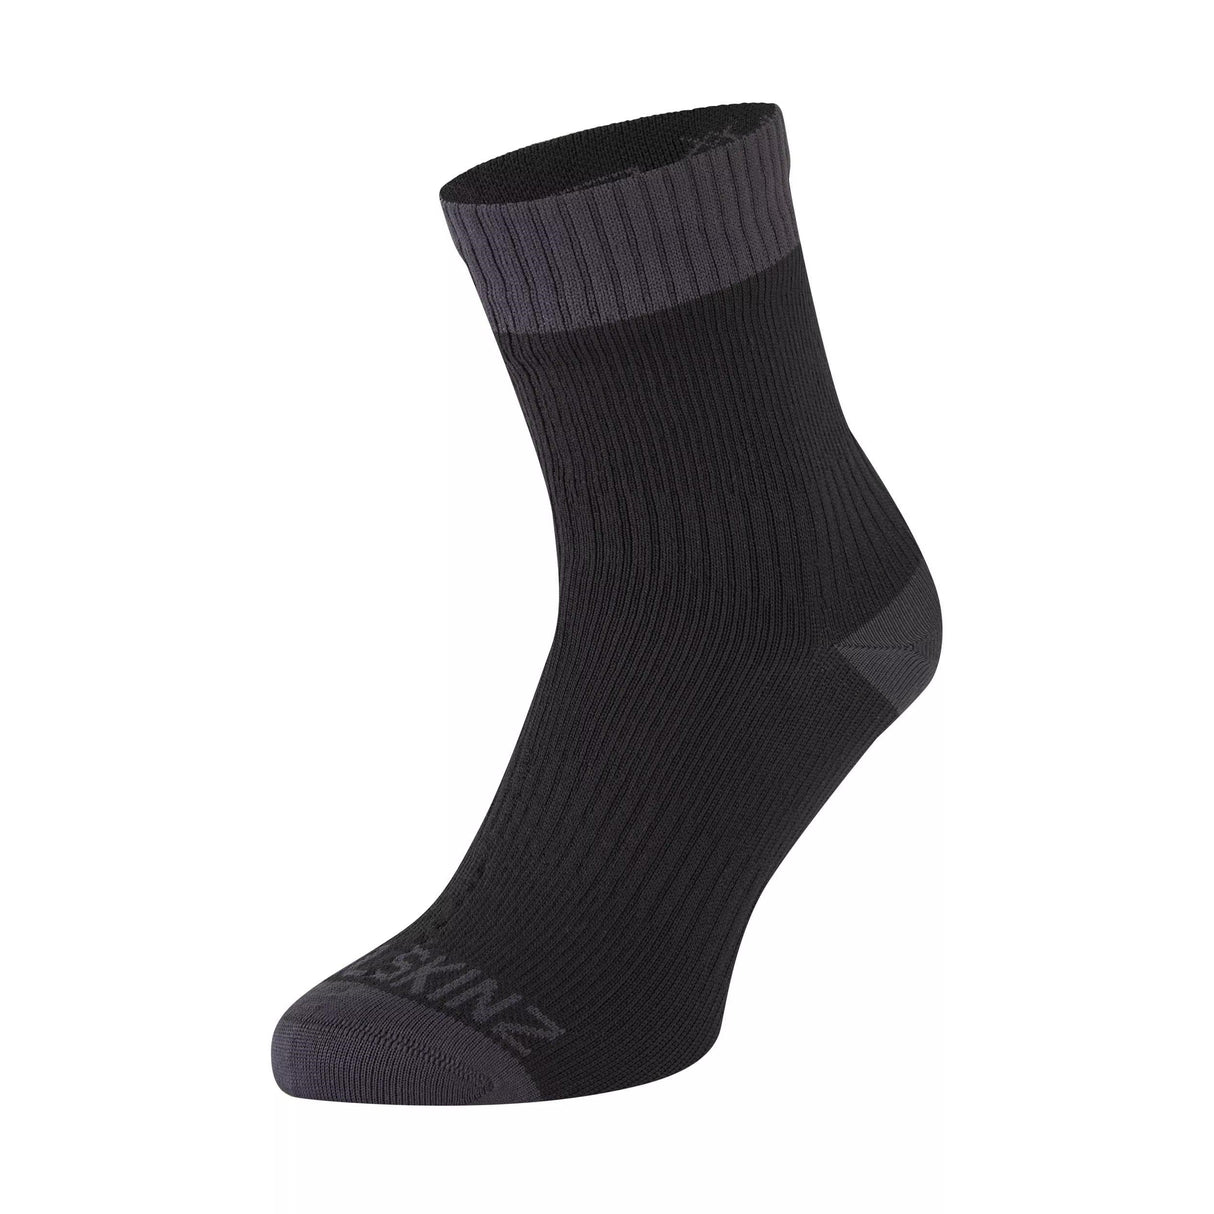 Sealskinz Wretham Waterproof Warm Weather Ankle Socks  -  Small / Black/Gray